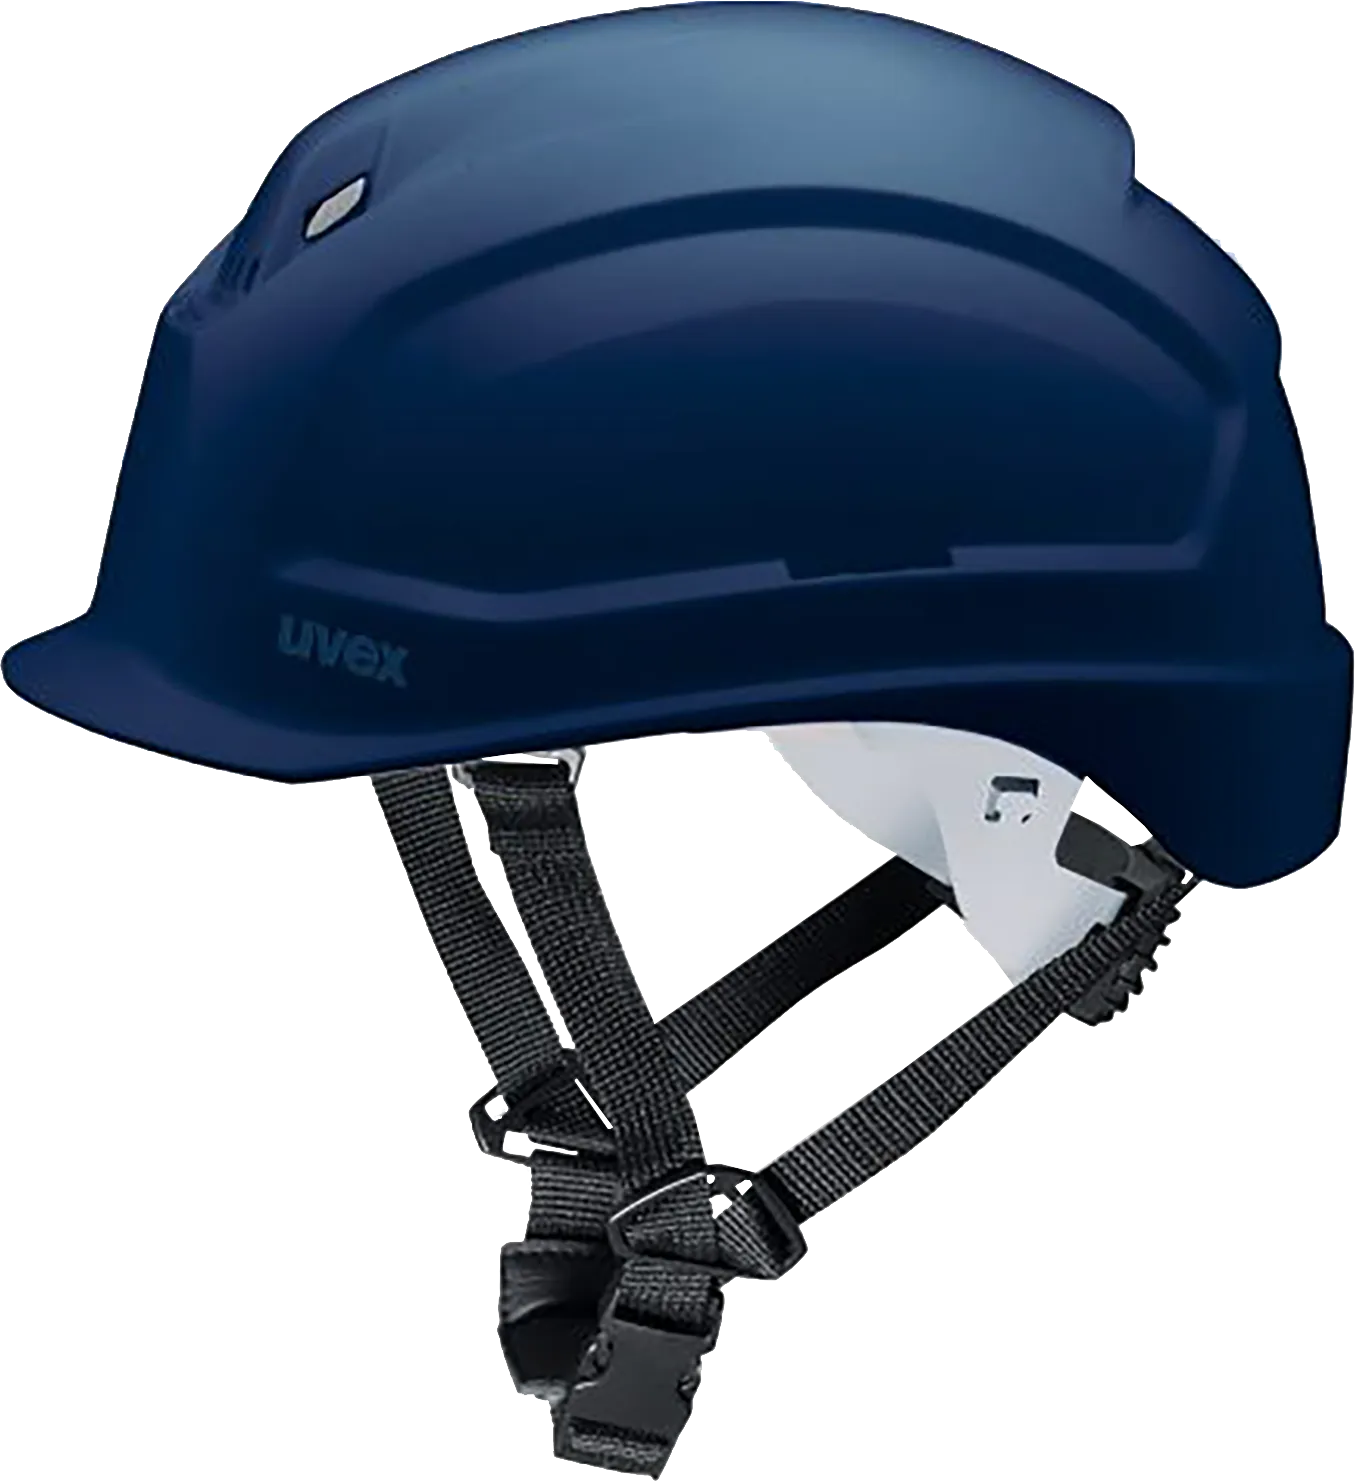 UVEX Pheos S-KR Safety Helmet, blue, w/Chinstrap